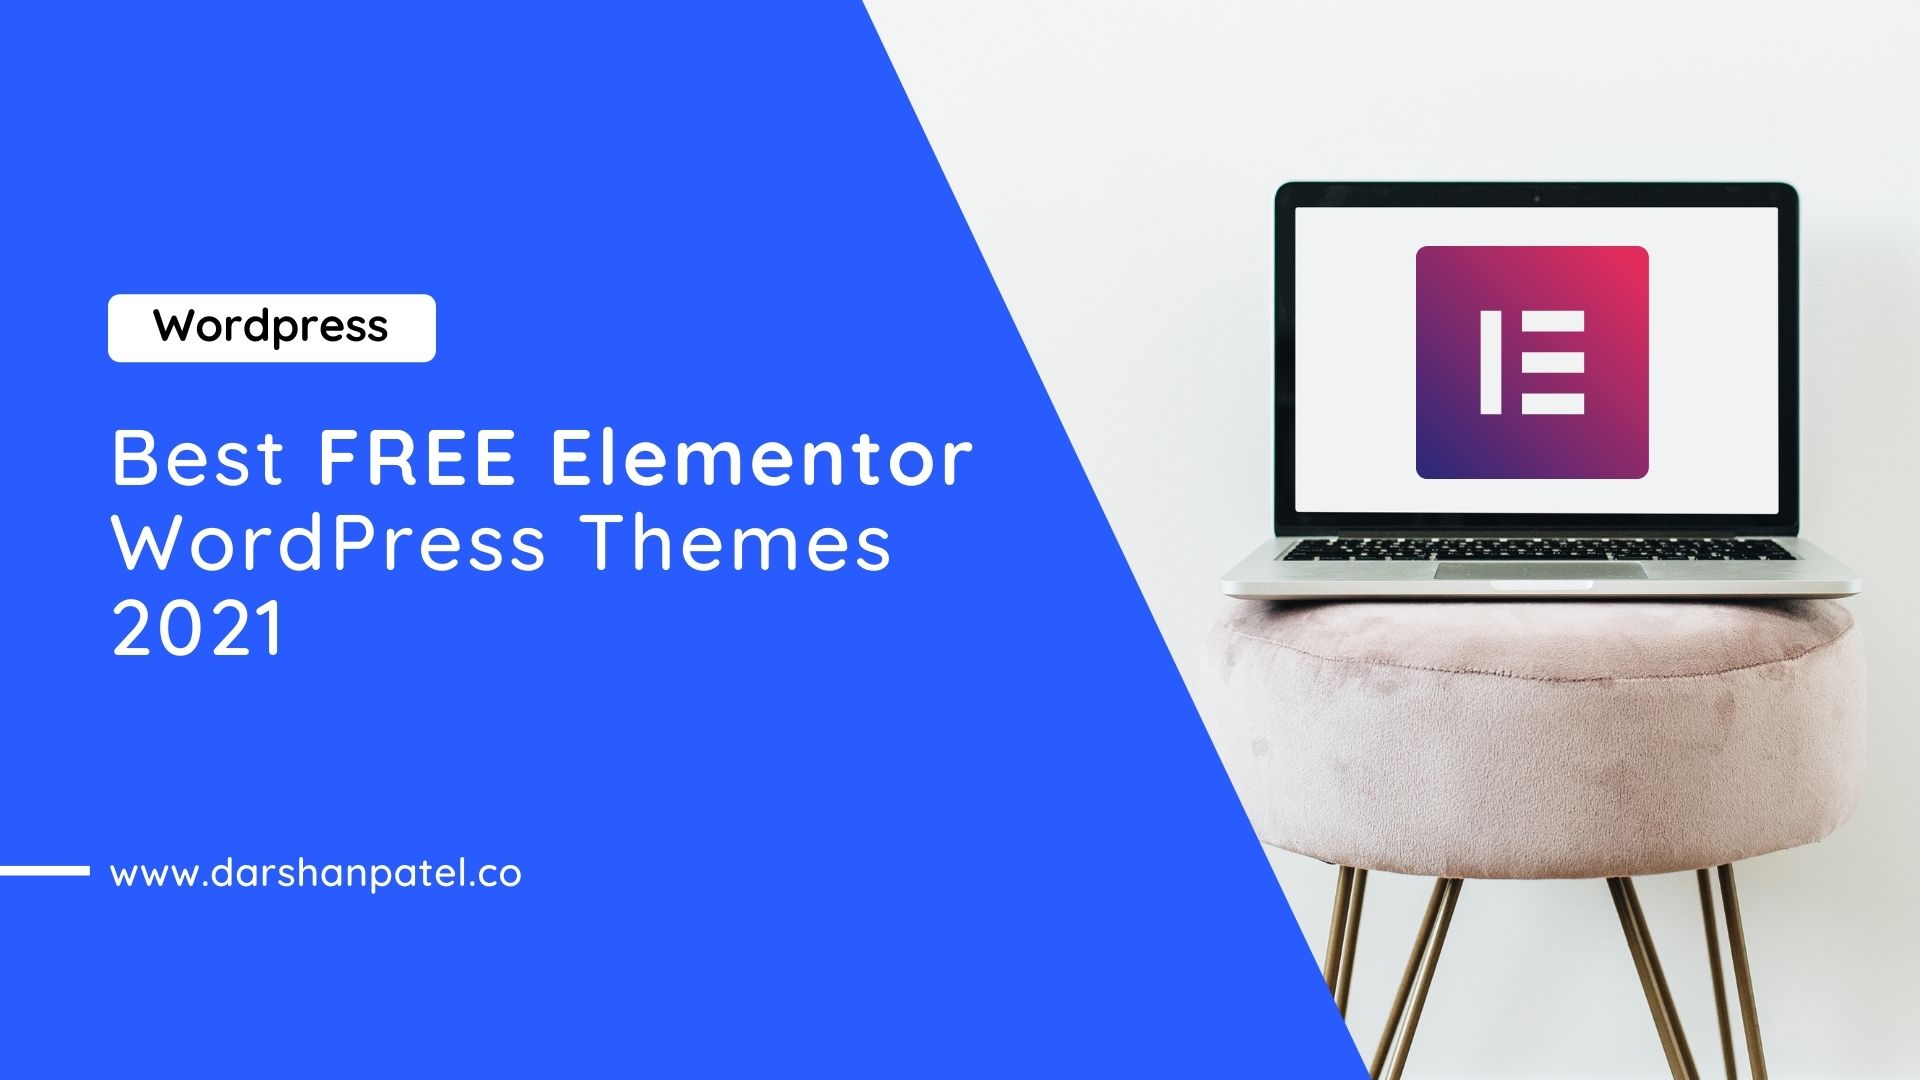 Best FREE Elementor
WordPress Themes
2021

— \www.darshanpatel.co